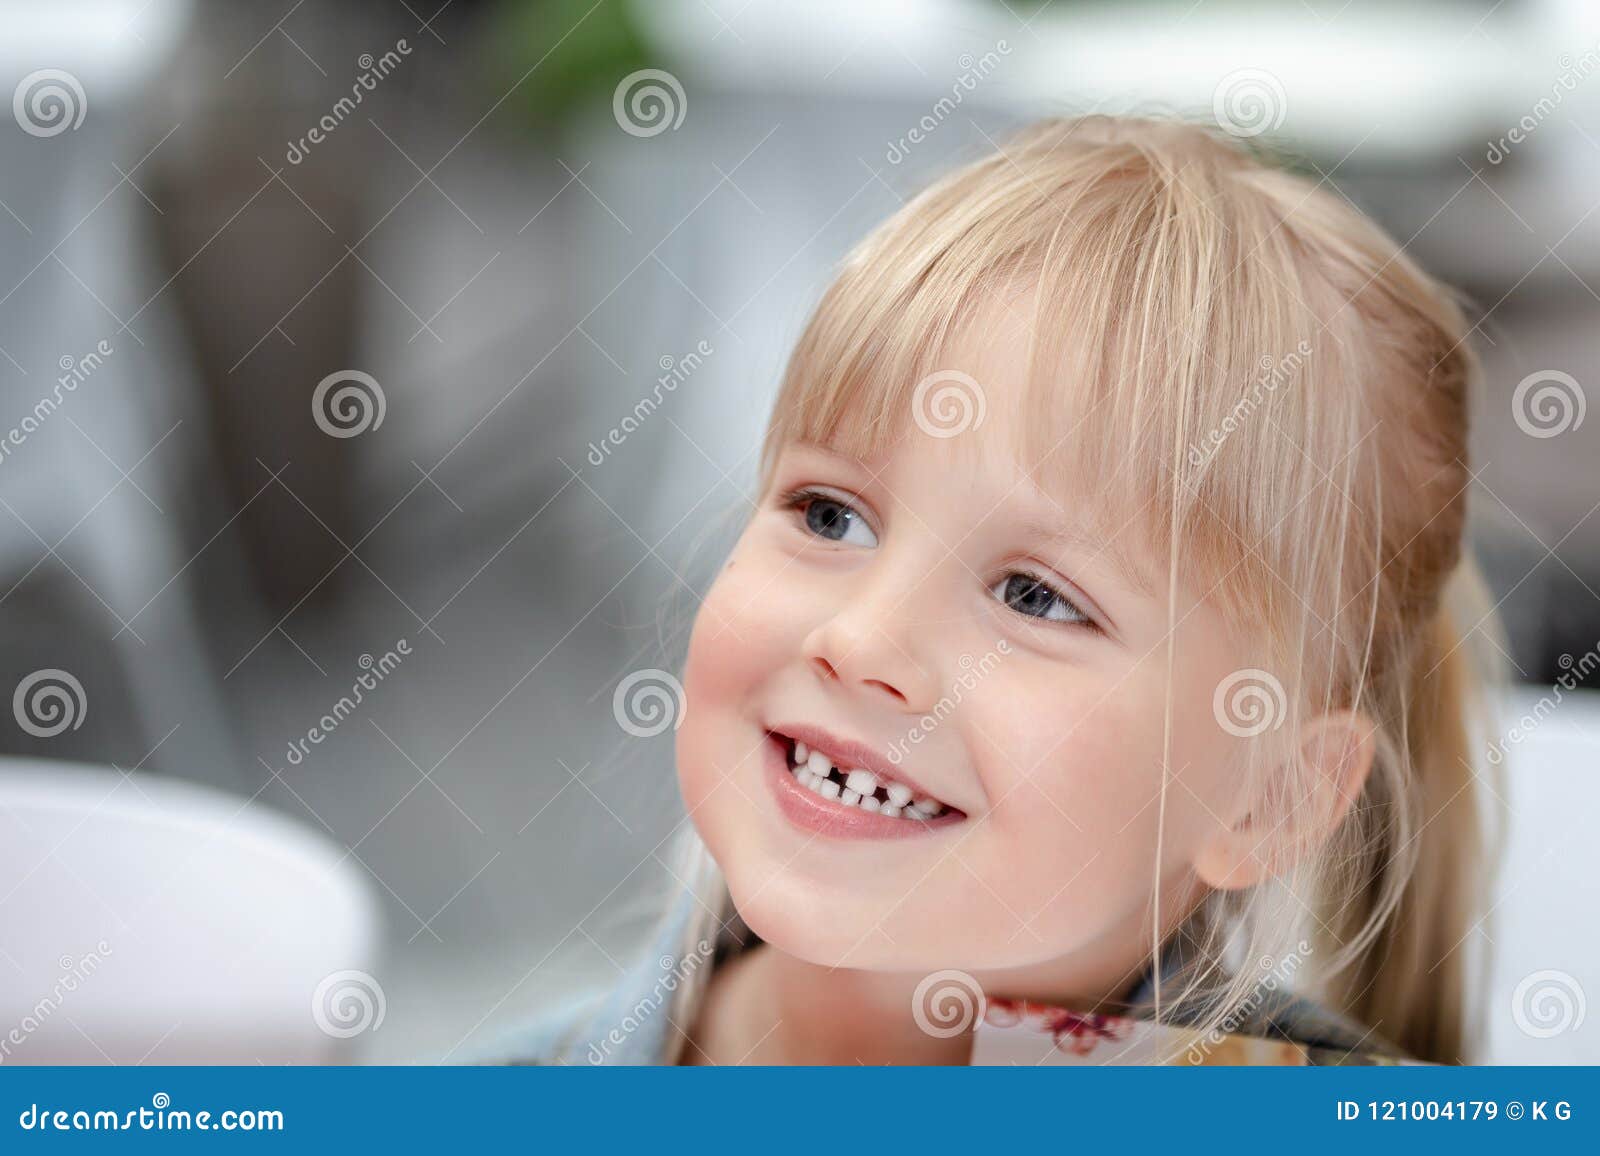 Close Up Portrait Of Little Cute Blond Caucasian Girl In